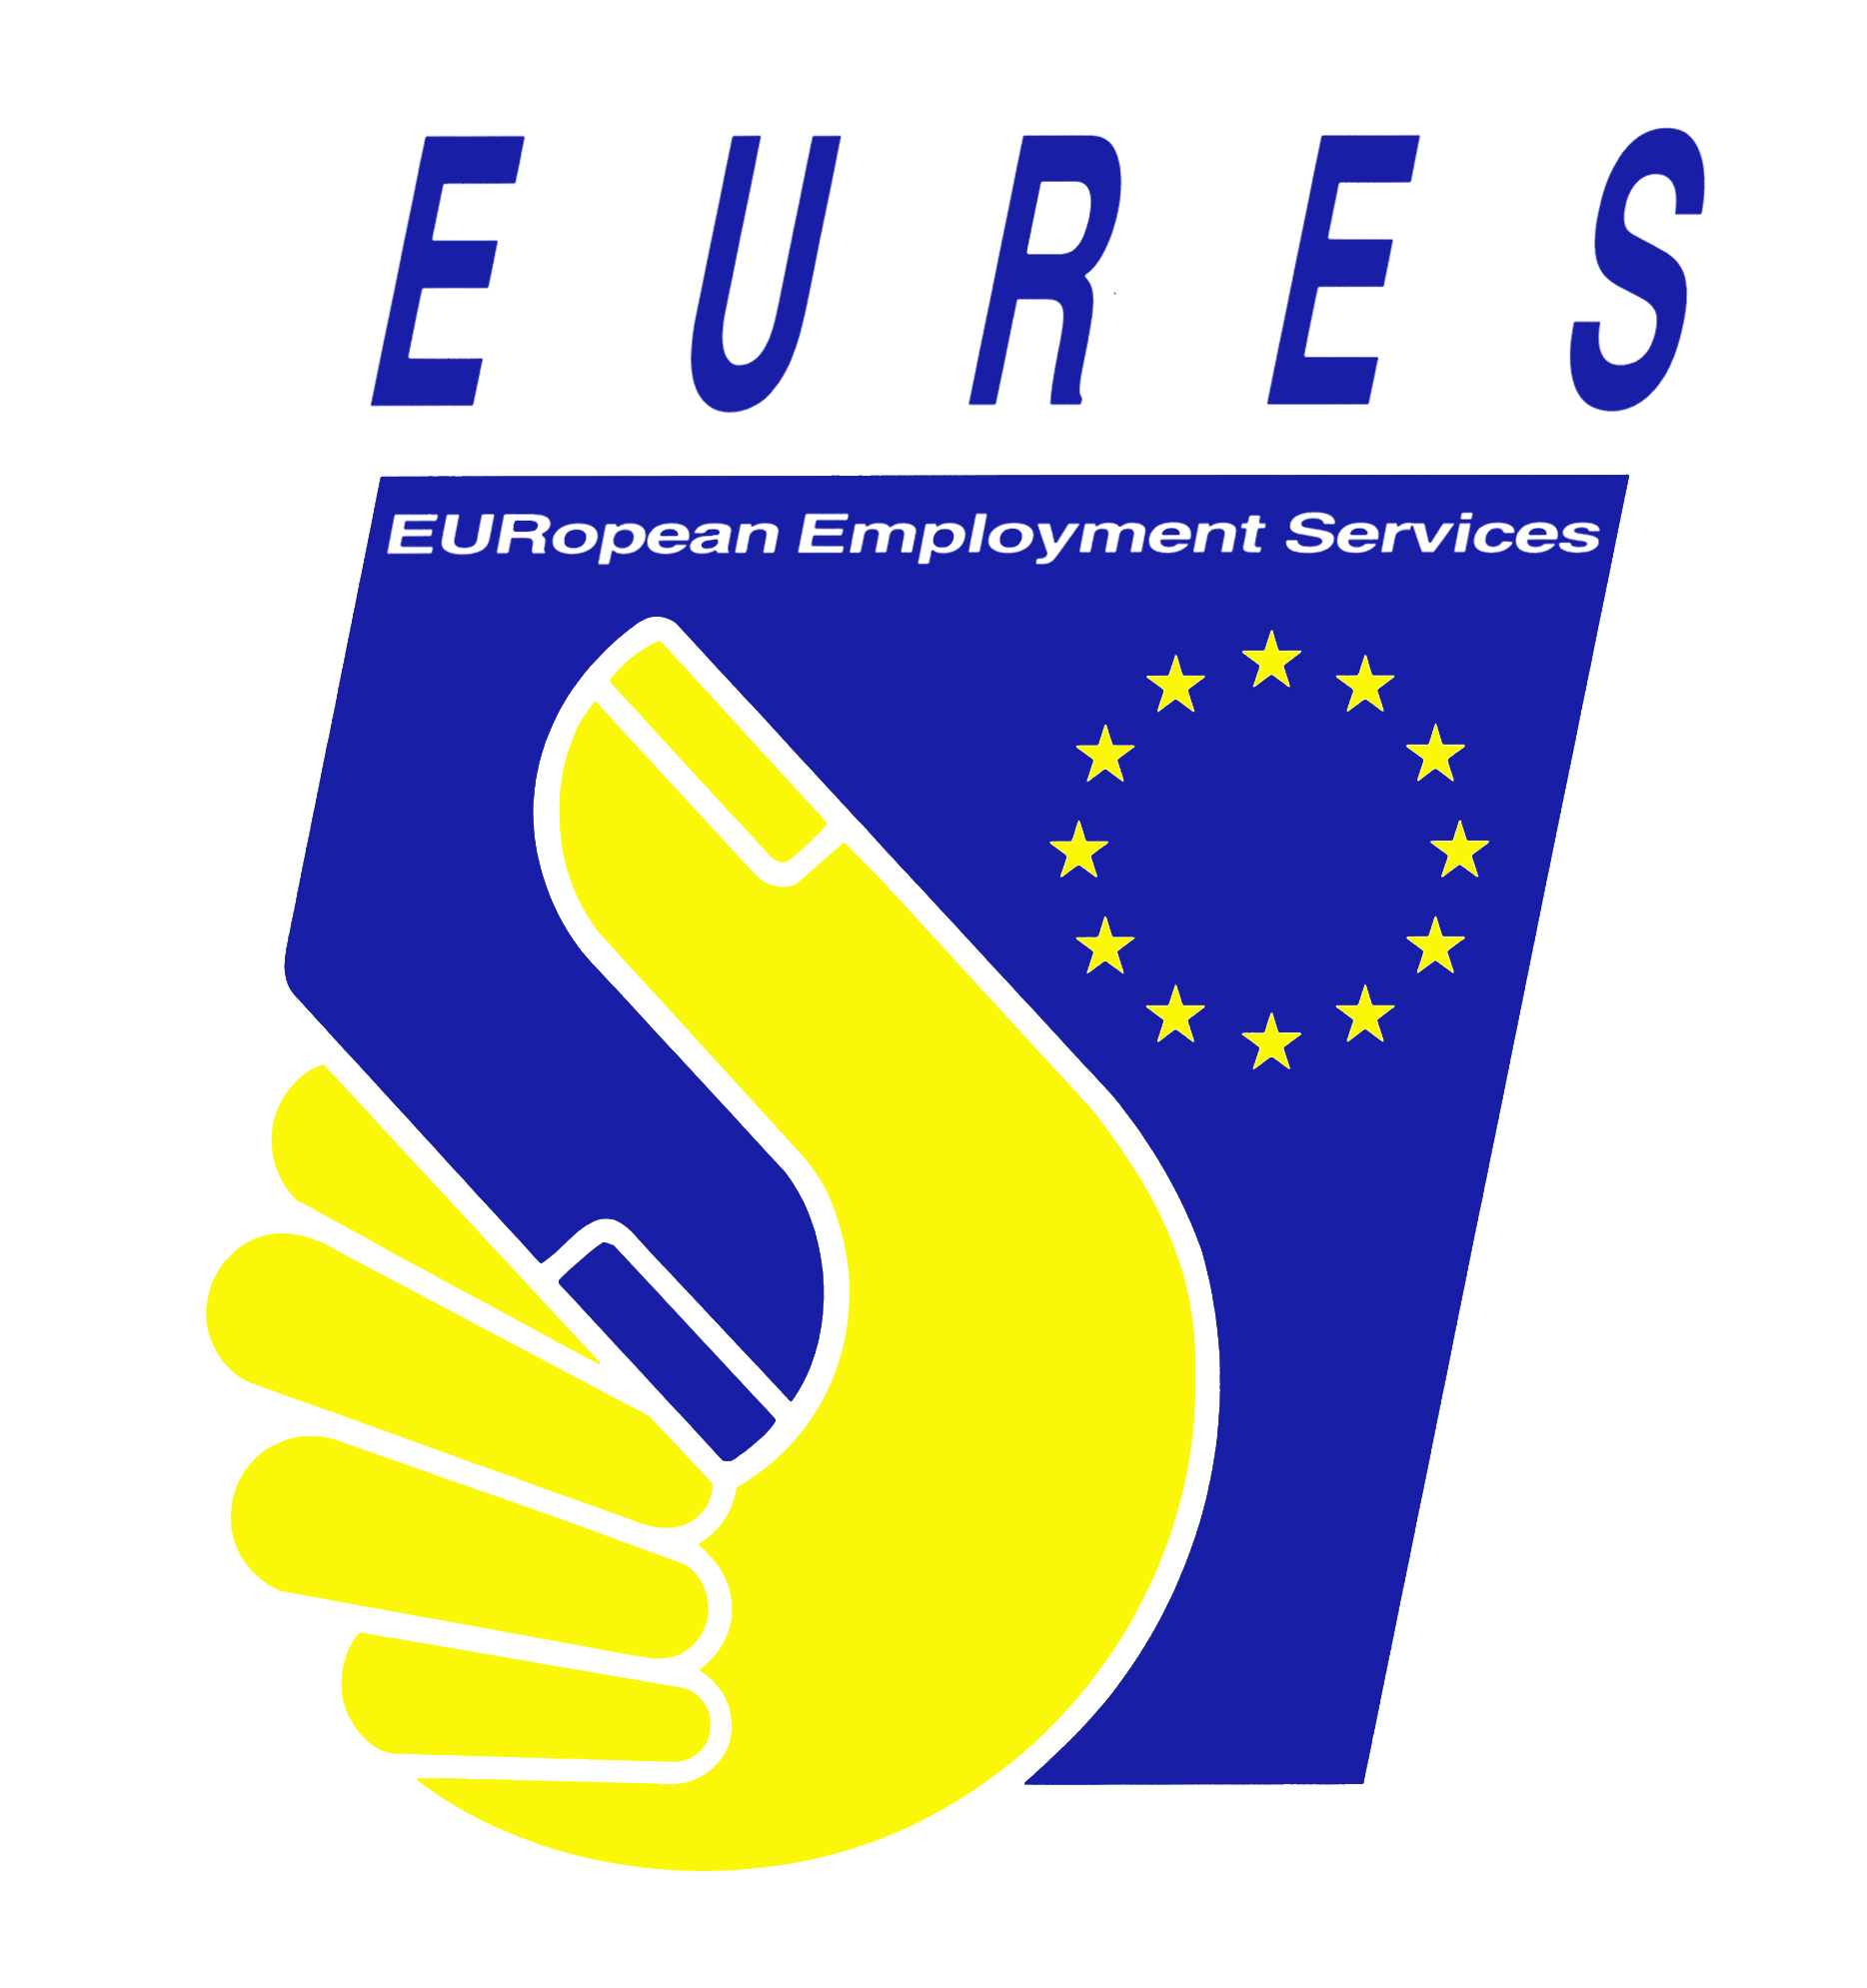 European Association of Erasmus Coordinators